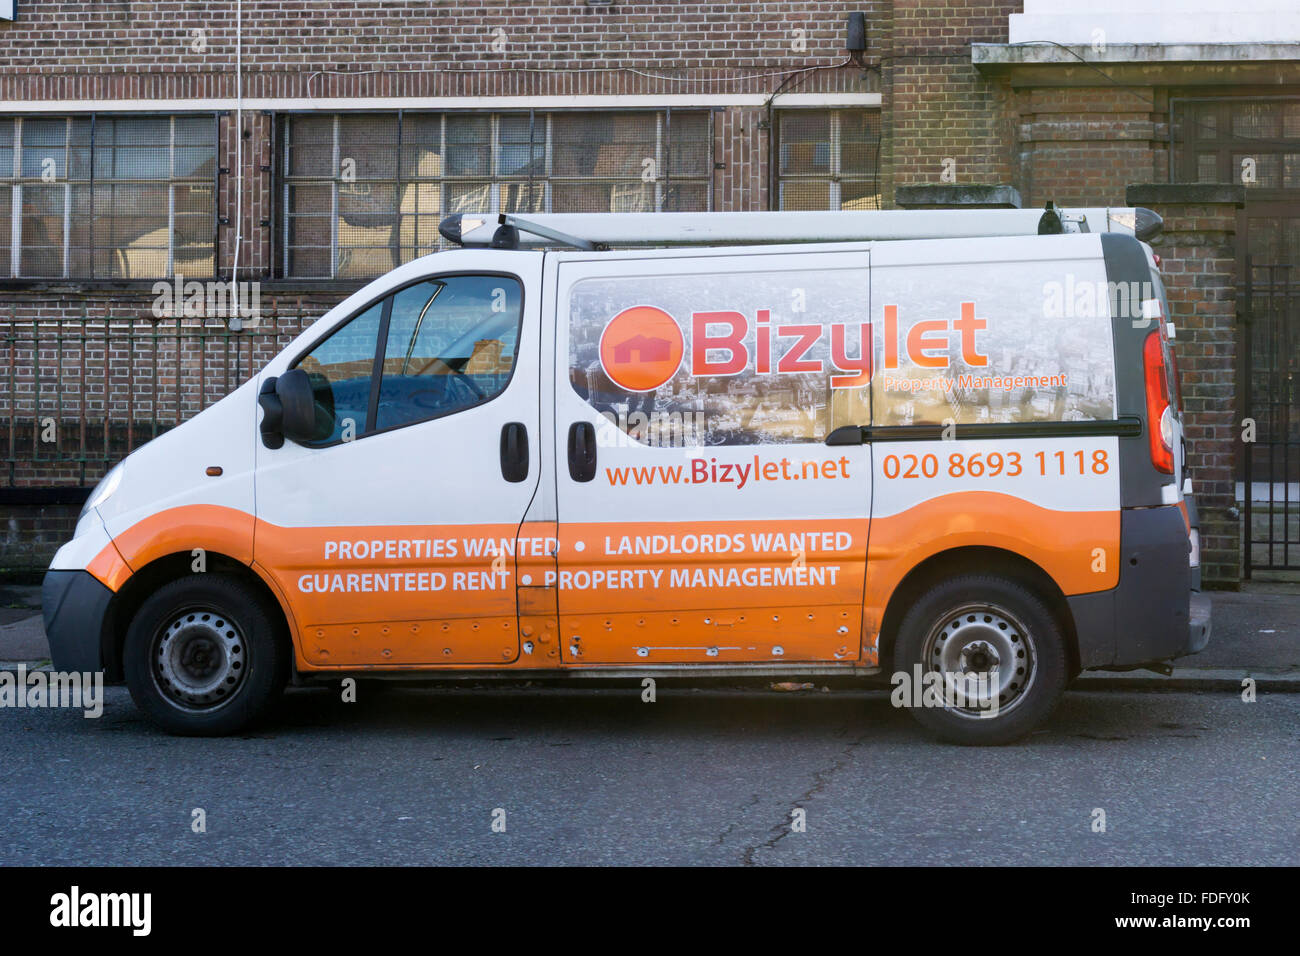 A Bizylet rental property management van in South London. Stock Photo